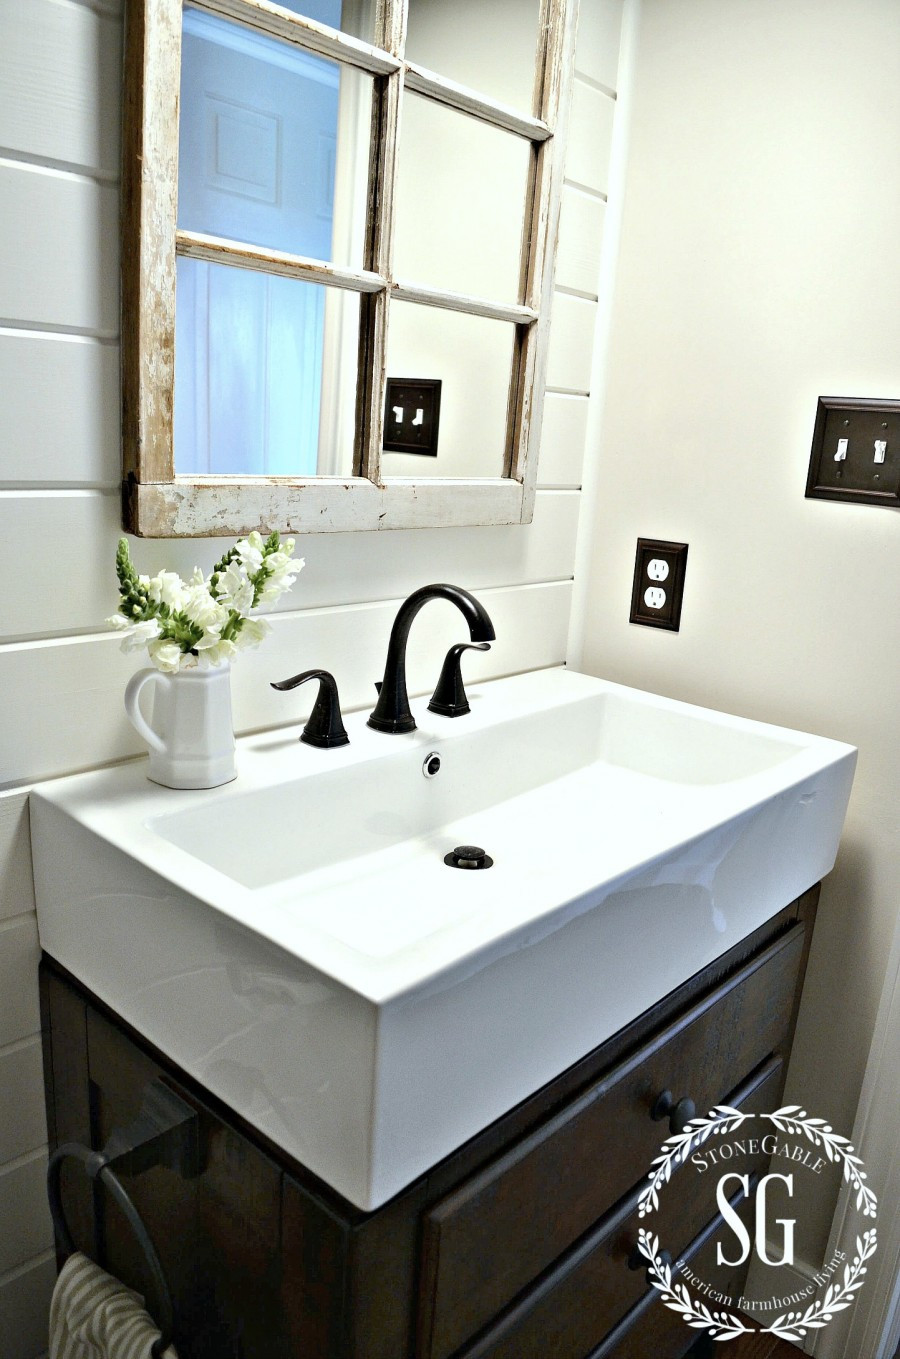 Farmhouse Bathroom Sink
 FARMHOUSE POWDER ROOM REVEAL StoneGable